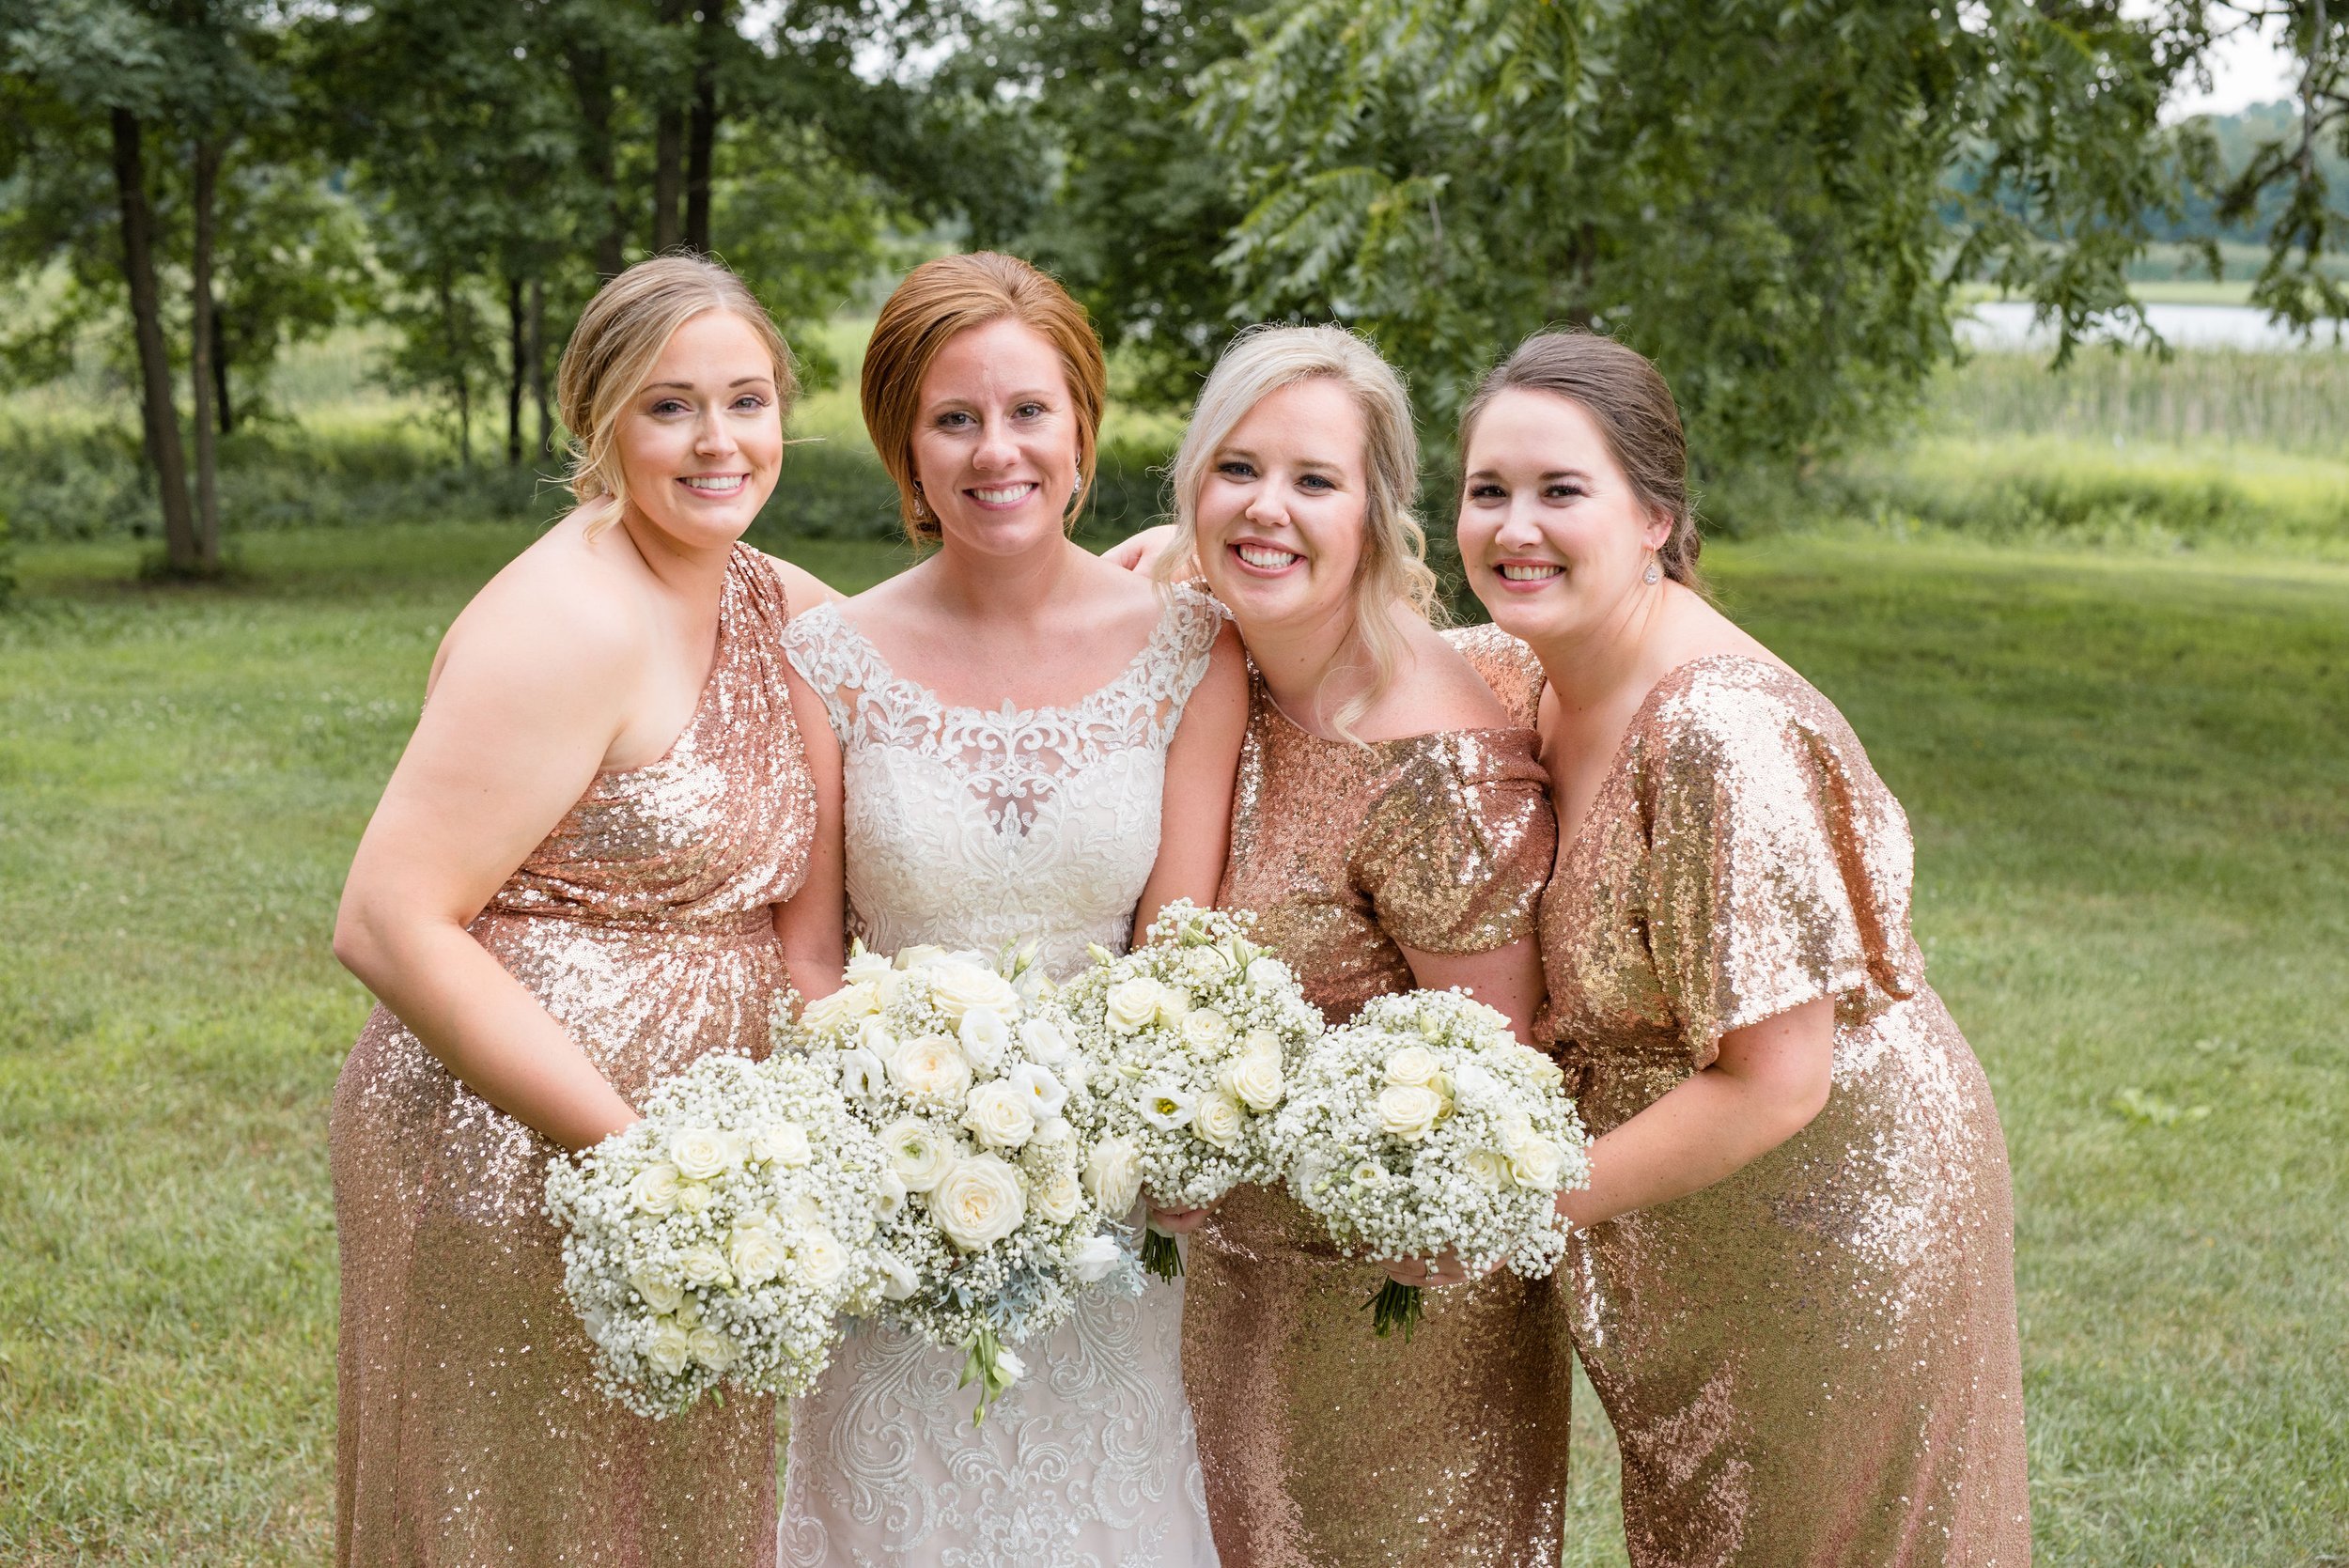 Erickson Farmstead Bride and Bridesmaids Gold Dresses.jpeg